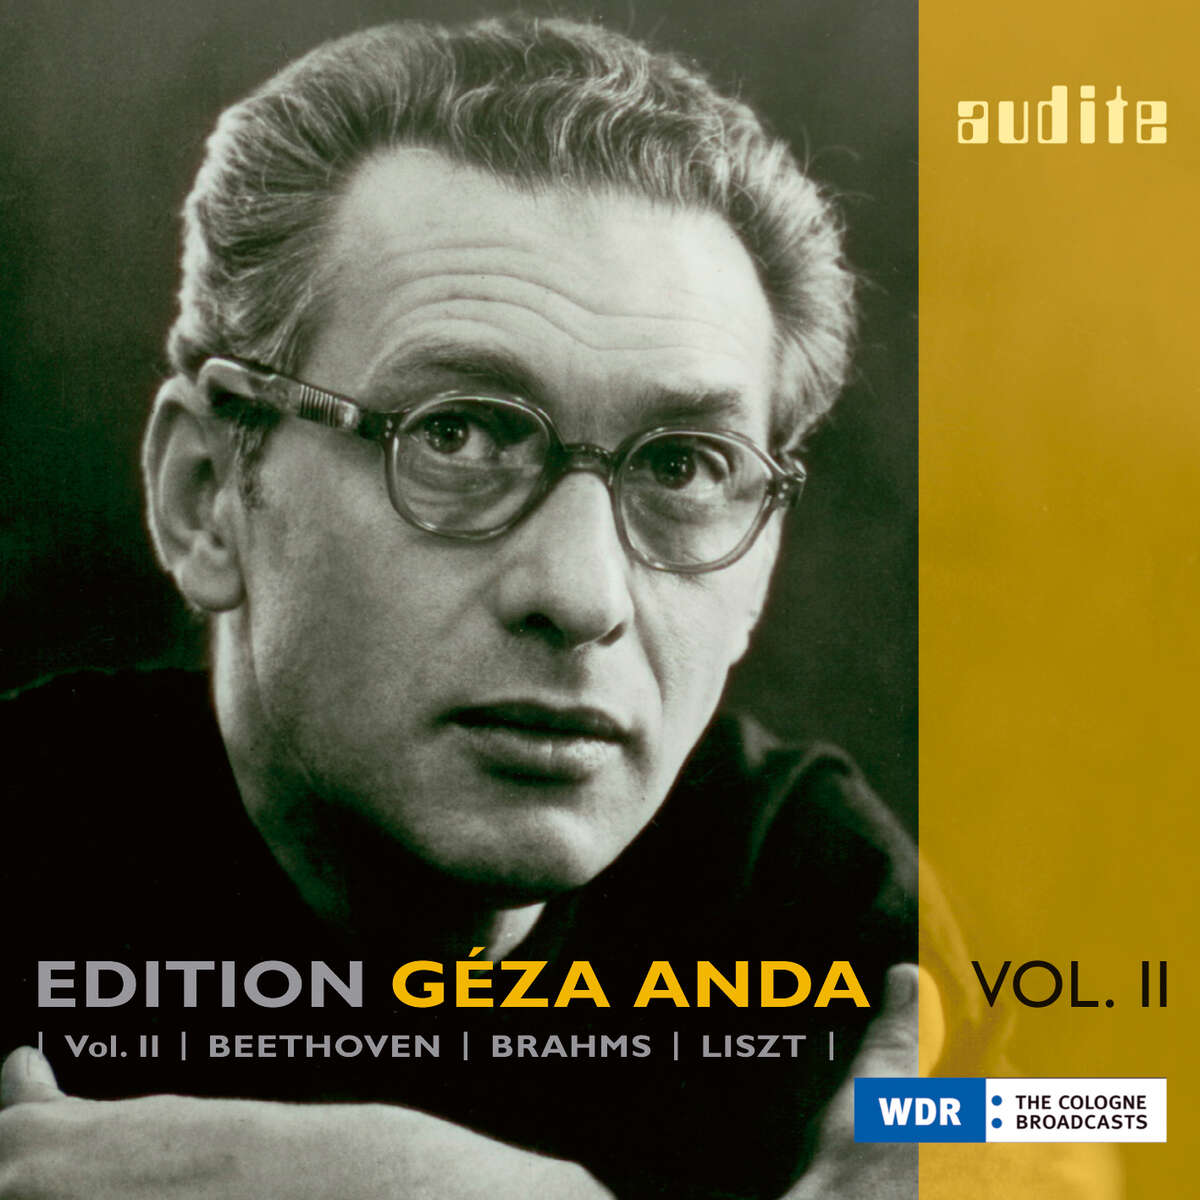 Edition Géza Anda (II) – Beethoven Brahms Liszt audite